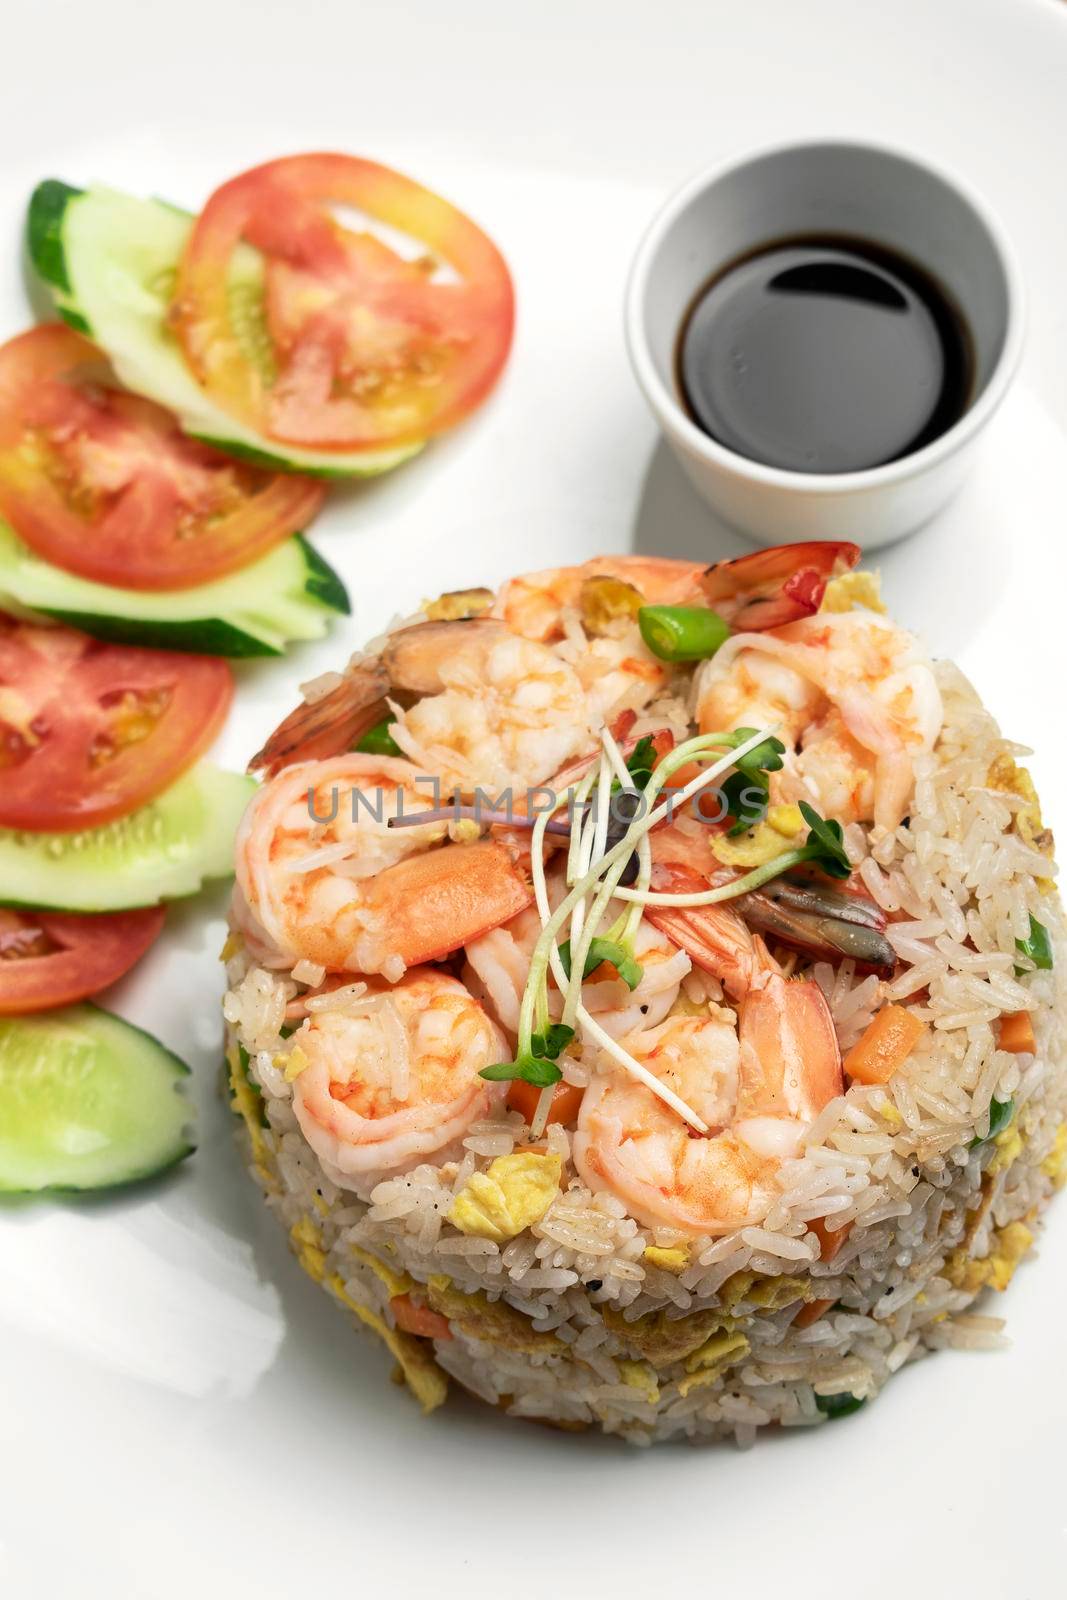 thai shrimp seafood fried rice meal in bangkok restaurant thailand by jackmalipan